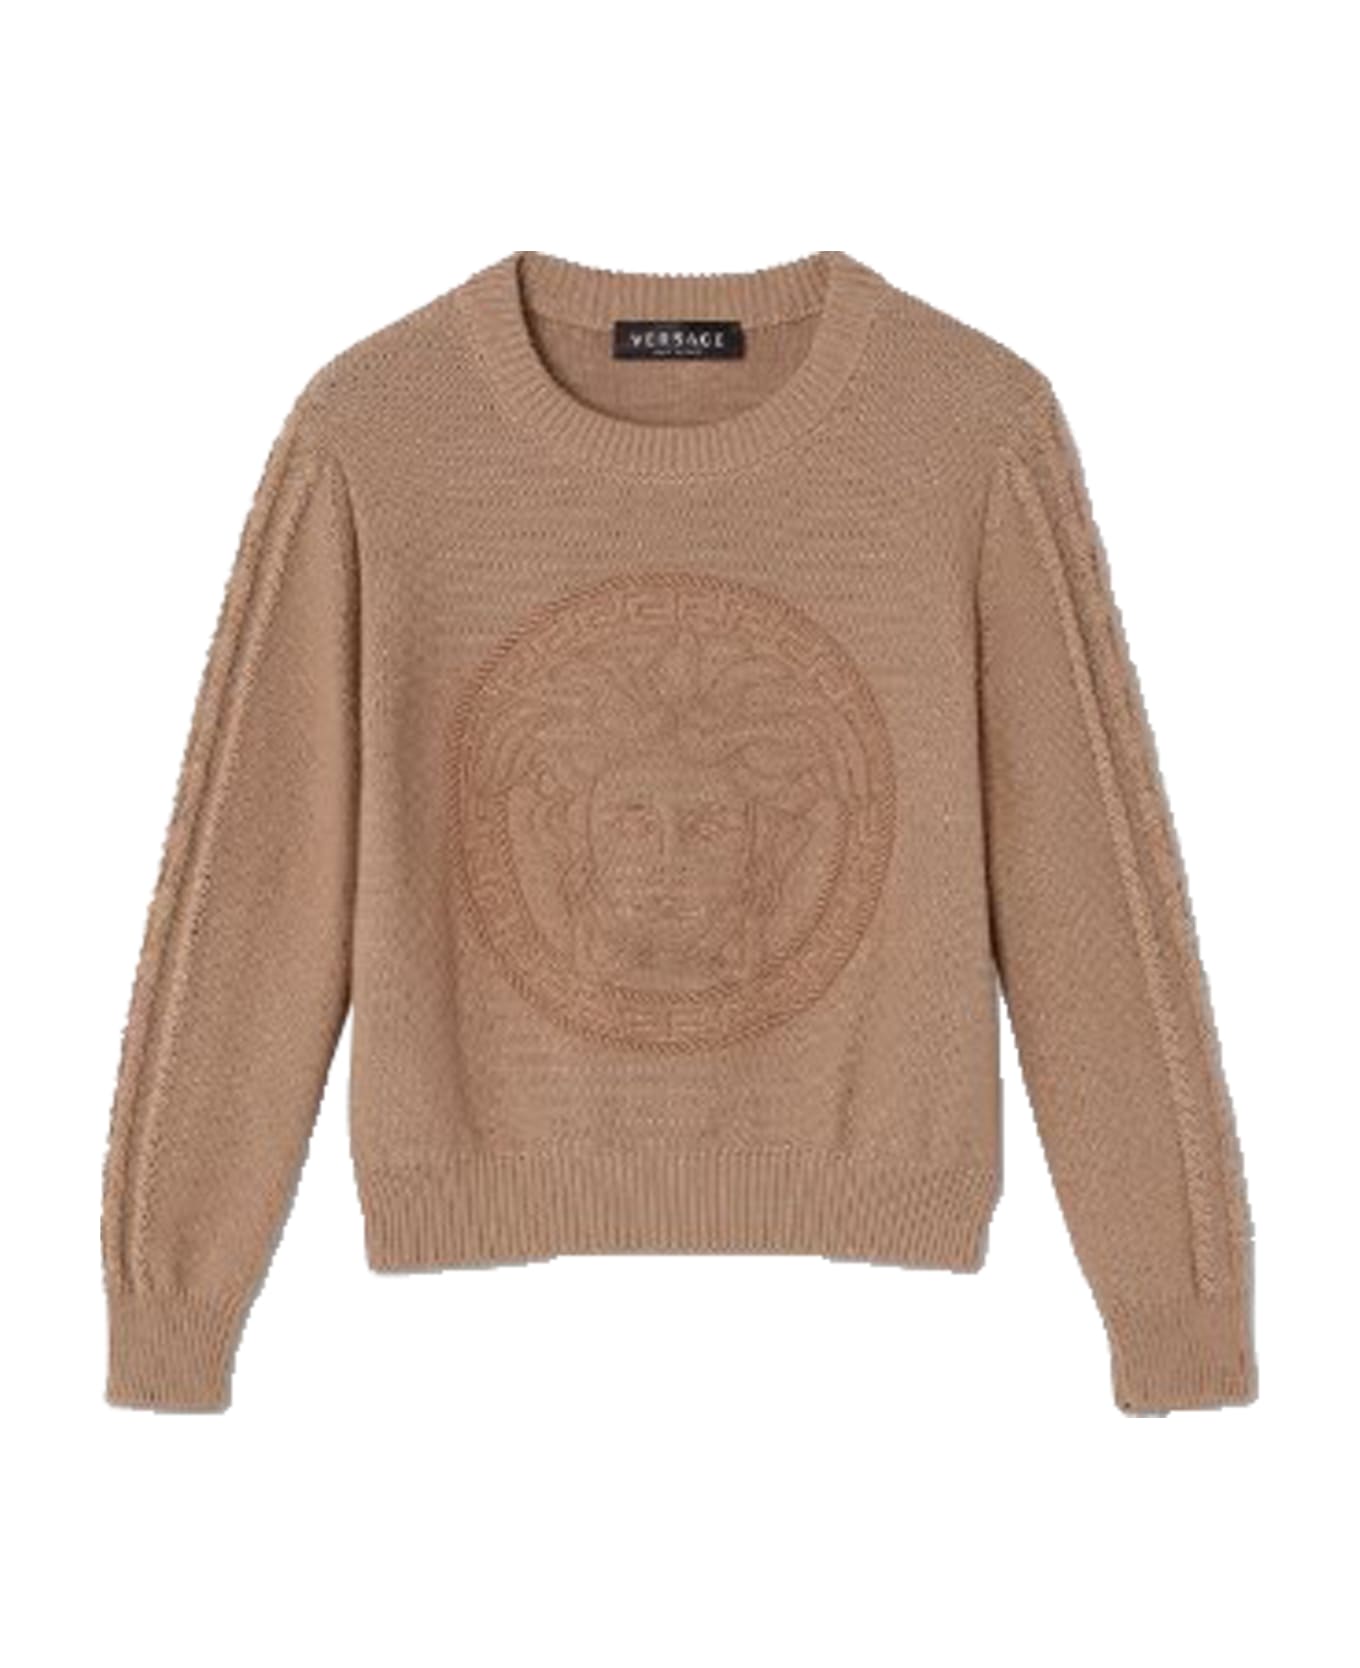 Versace Sweatshirt - Sabbia